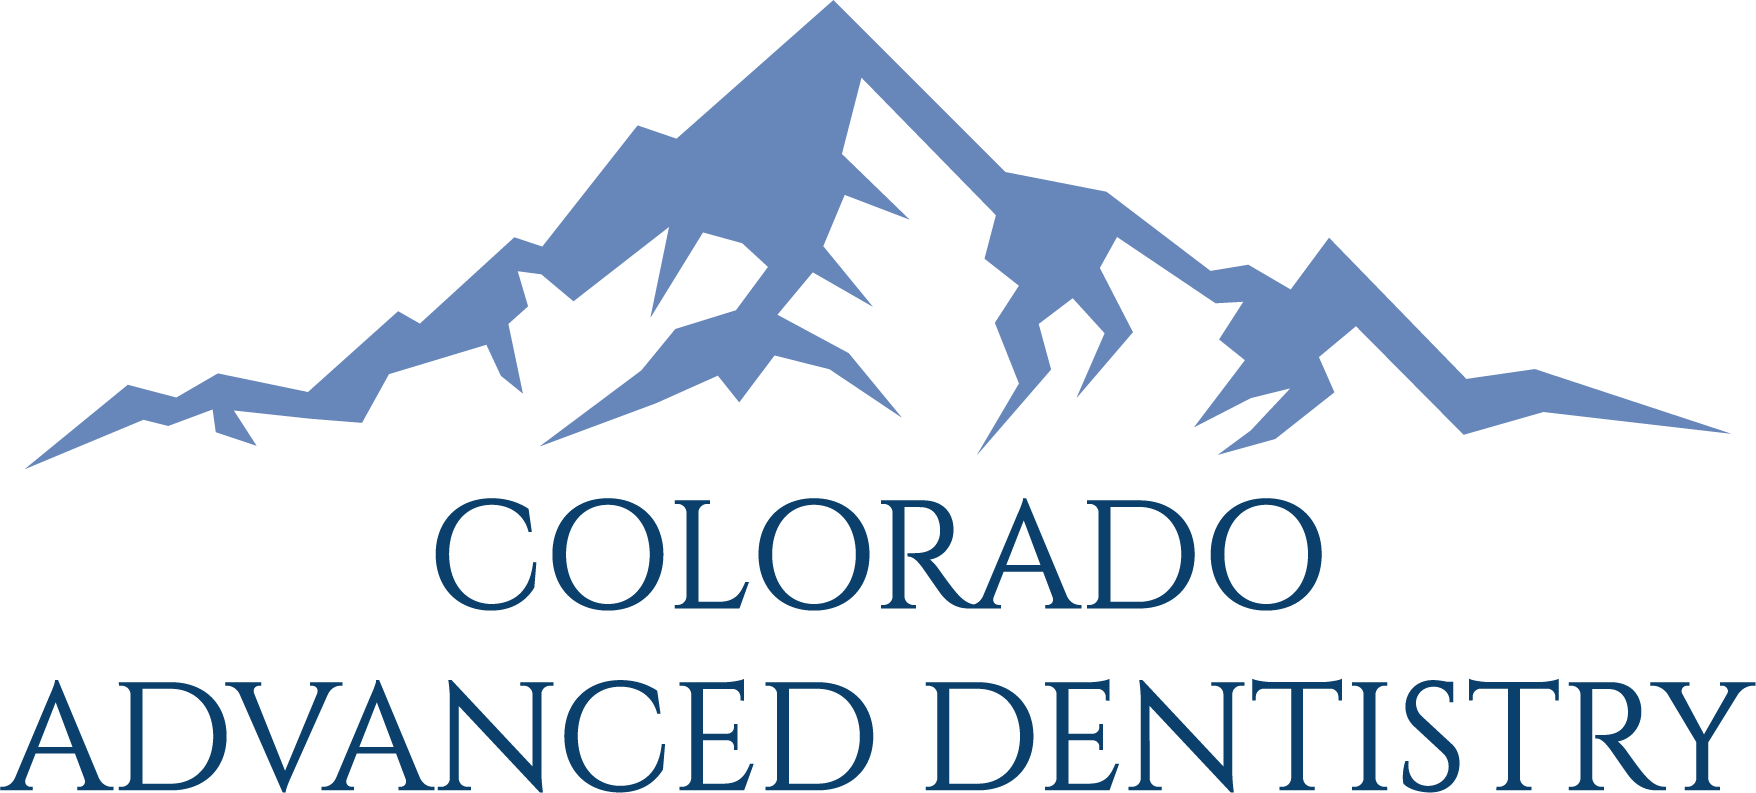 Professional Dentists in Denver, CO